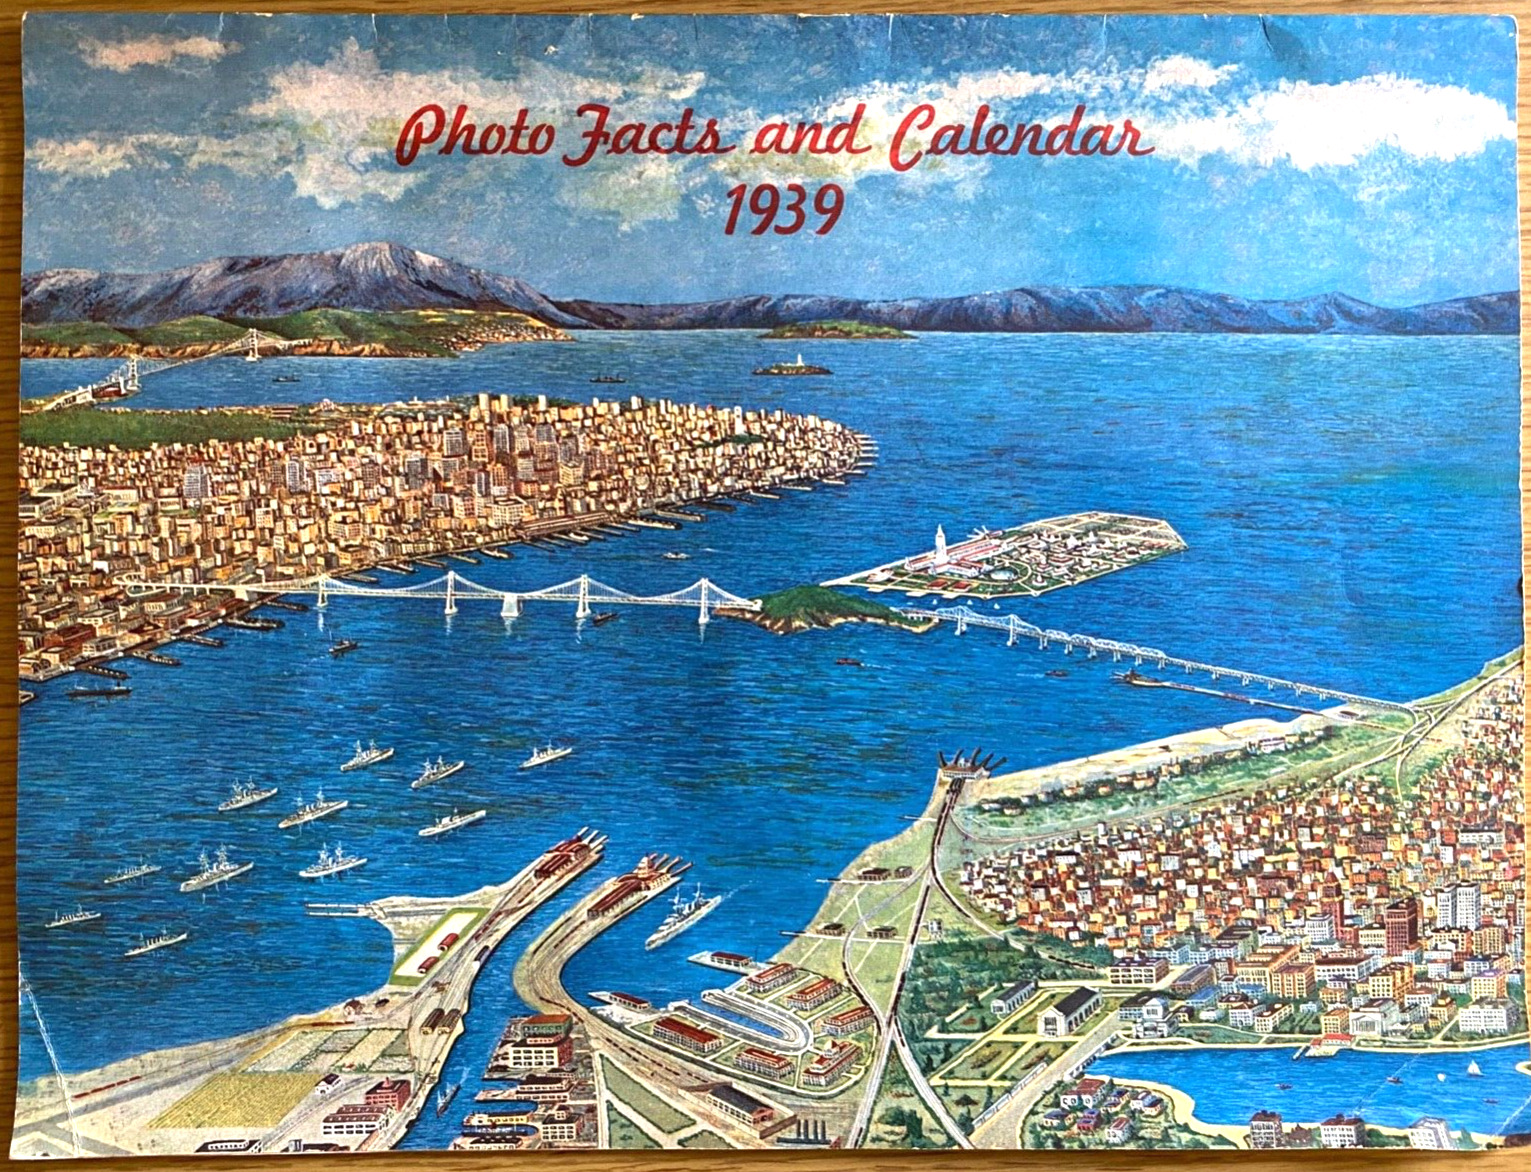 1939 SAN FRANCISCO, CALIFORNIA vintage tourism calendar PHOTO FACTS World's Fair